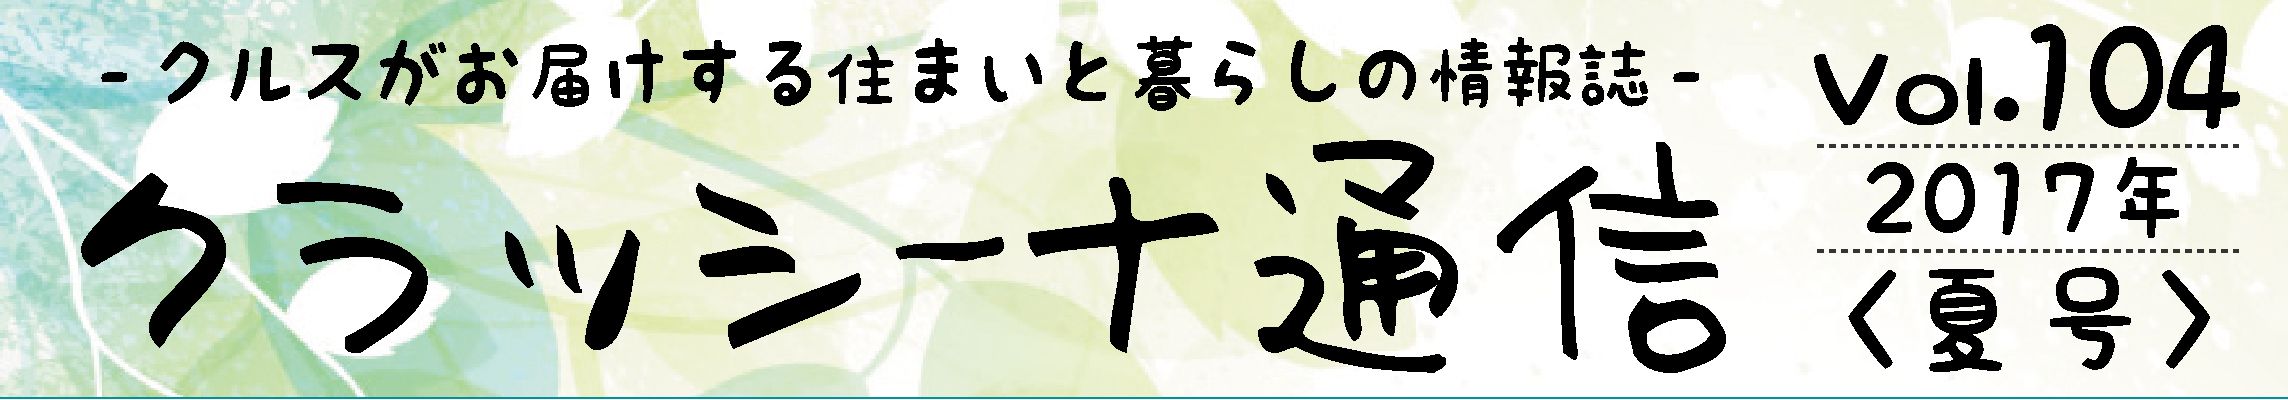 KuraSi-natu-sin104-01.jpg